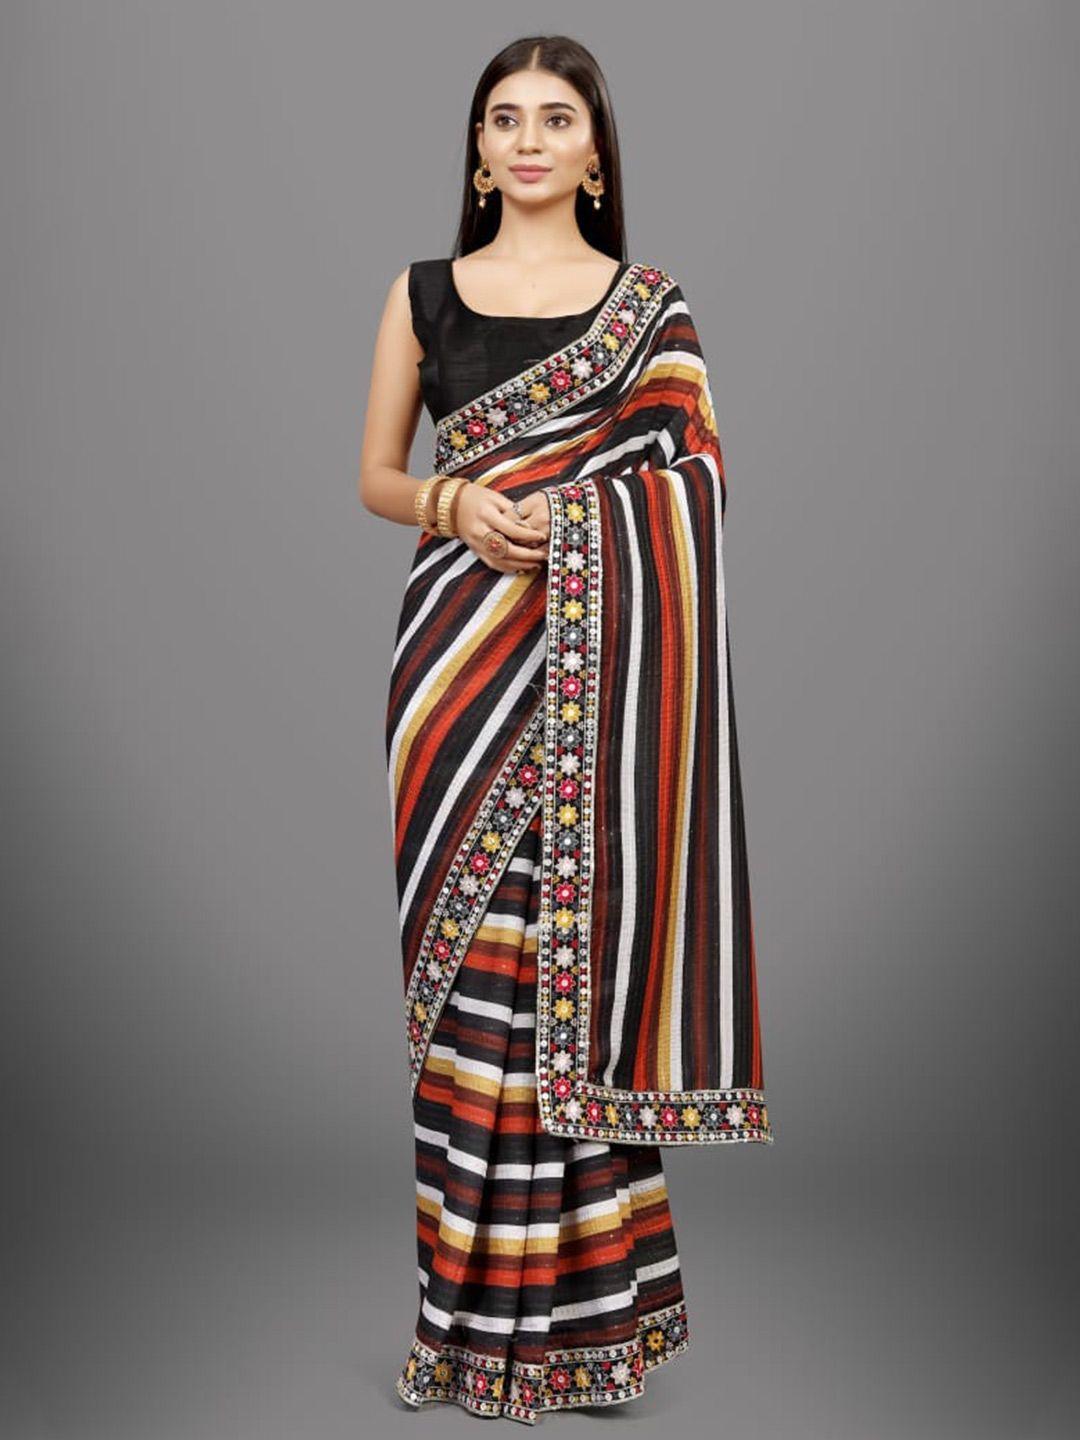 munir striped embroidered saree